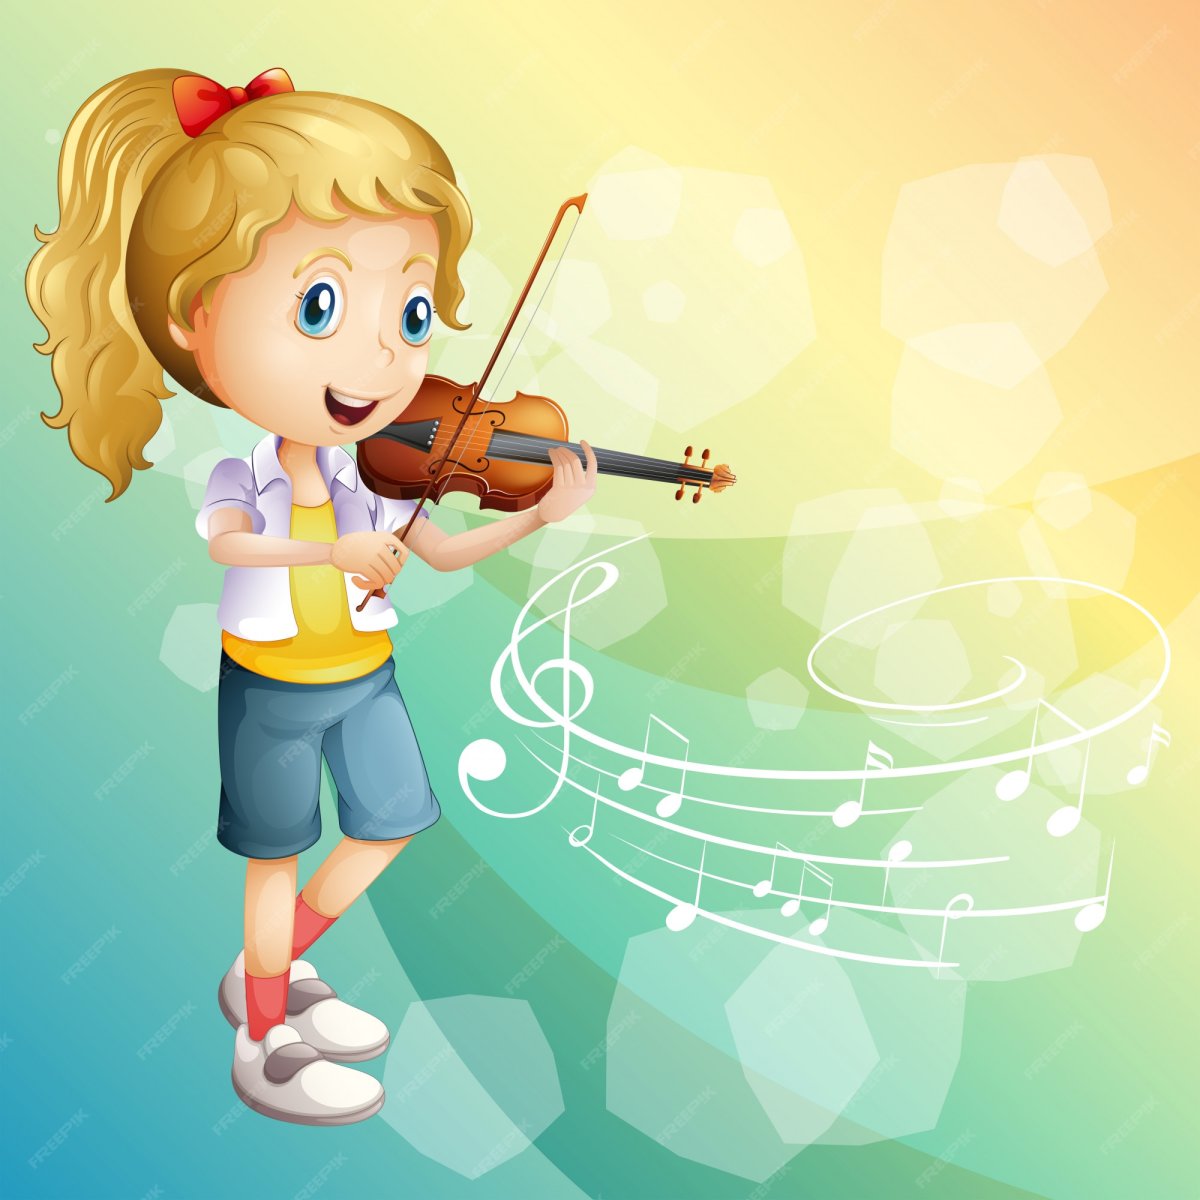 Детские иллюстрации скрипки